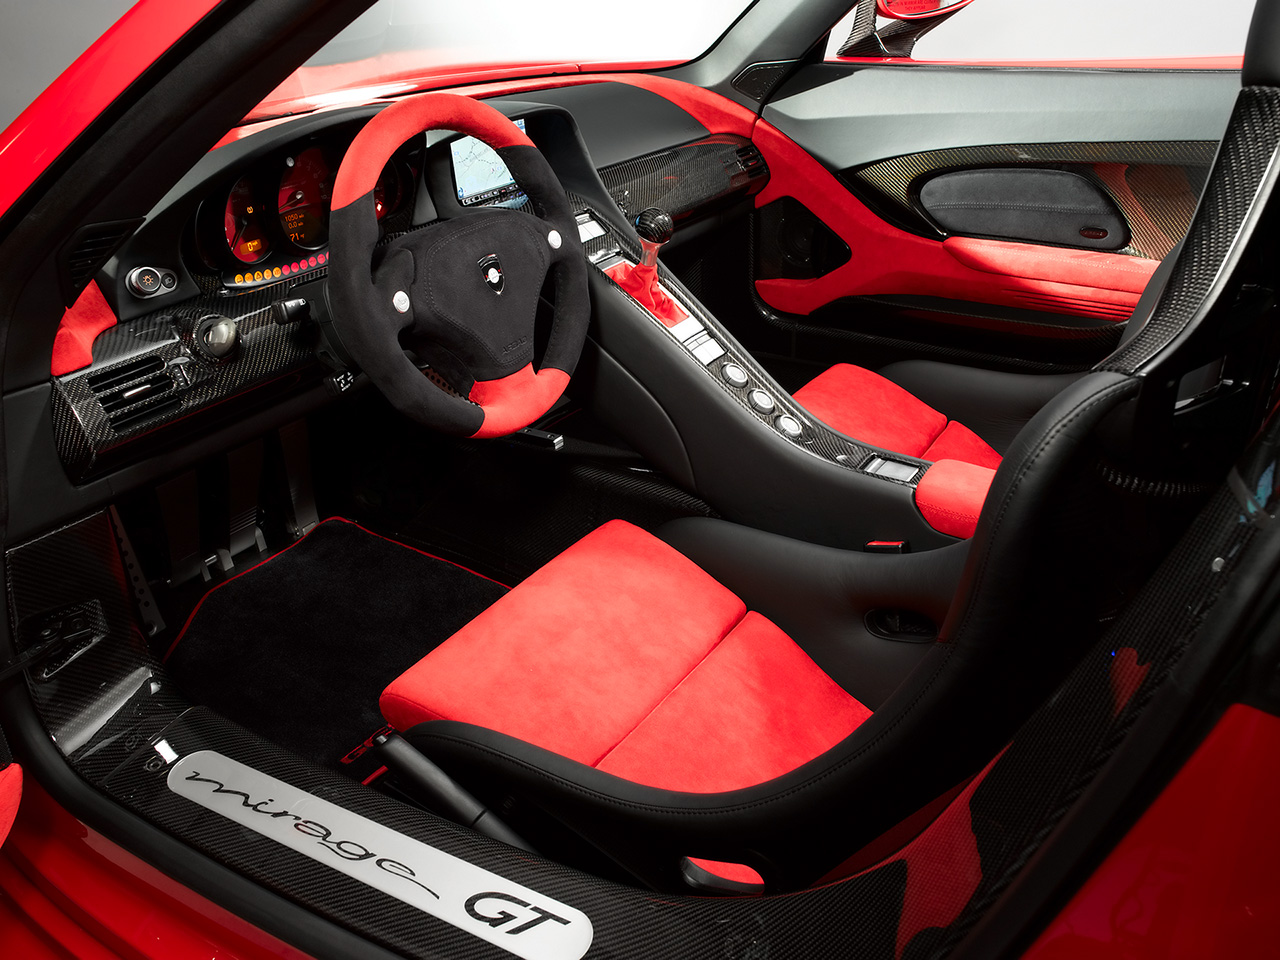 Spesifikasi Porsche Carrera GT Welcome To My Blog